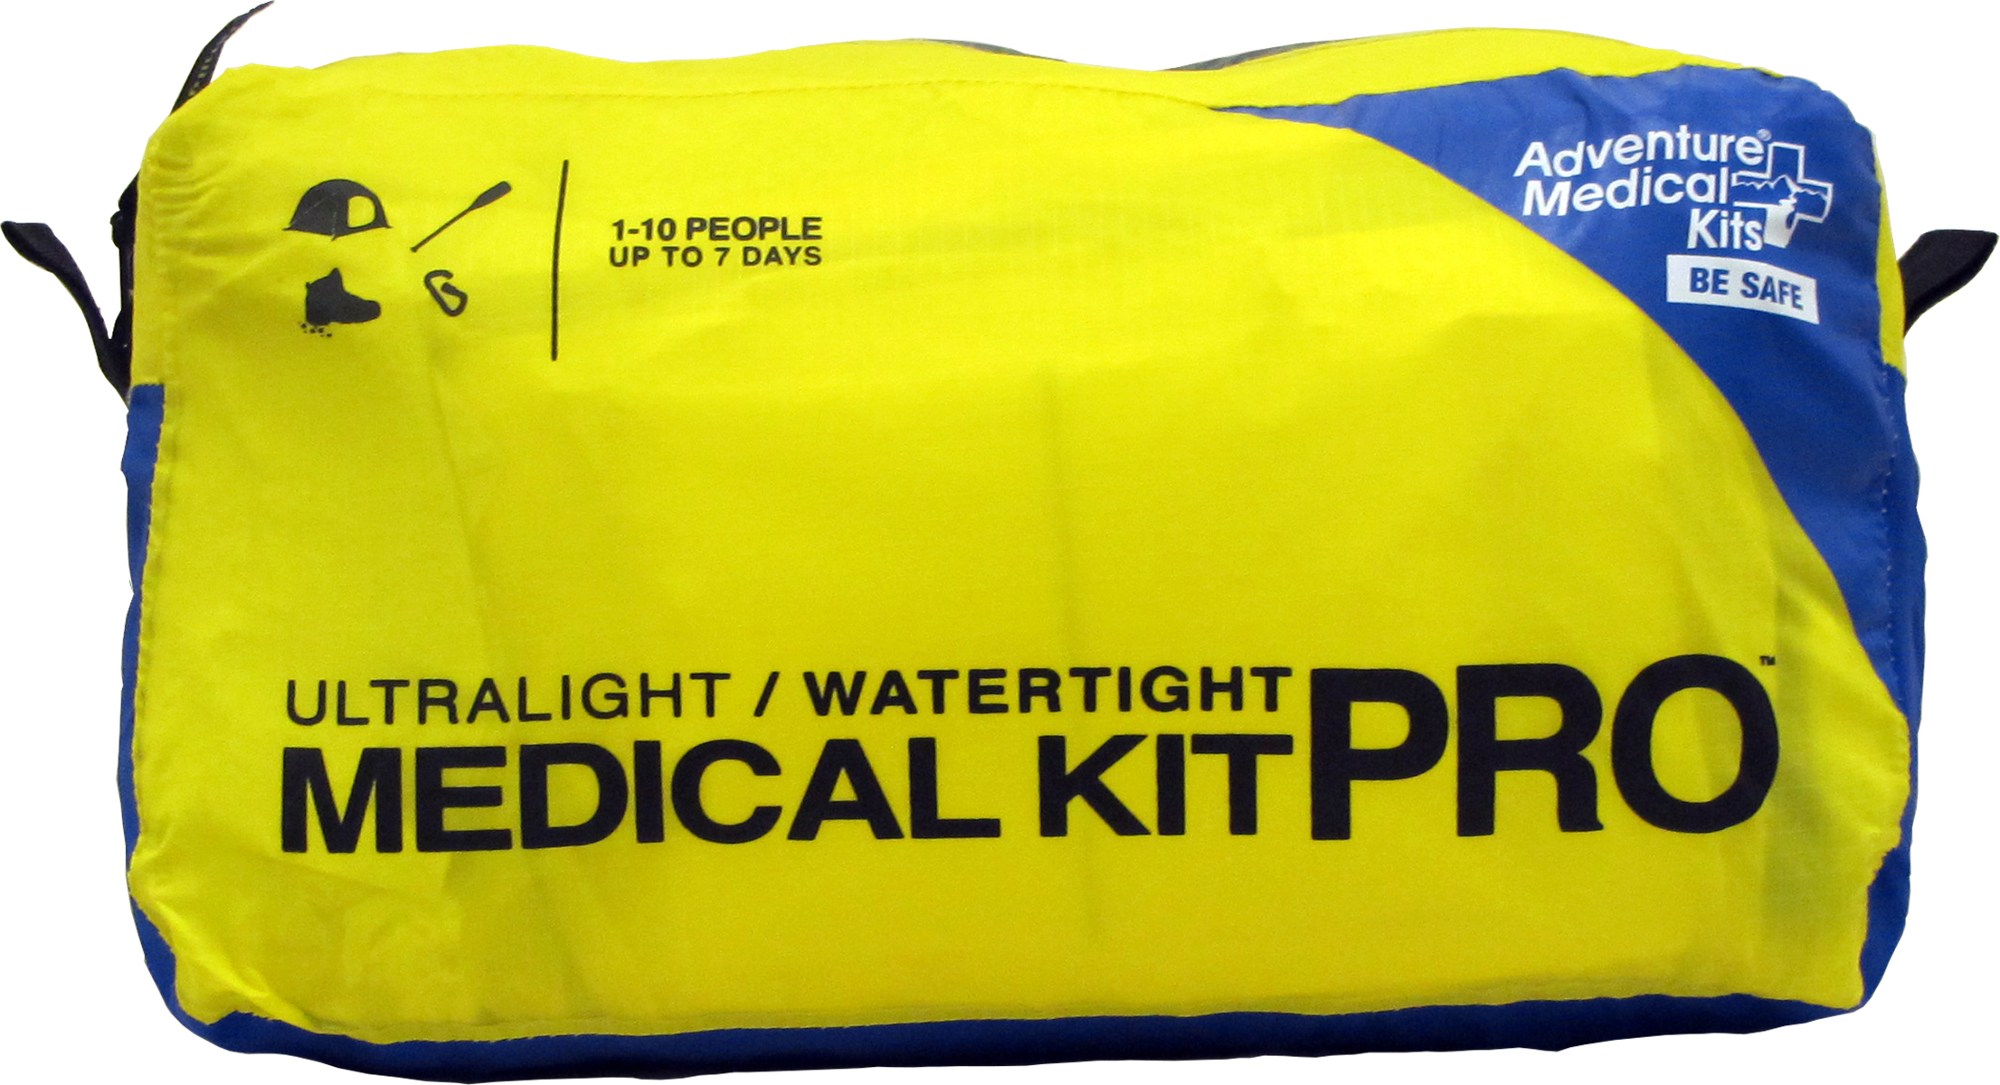 Сверхлегкий/водонепроницаемый медицинский набор PRO Adventure Medical Kits quikclot trauma pack pro жгут quikclot adventure medical kits цвет one color